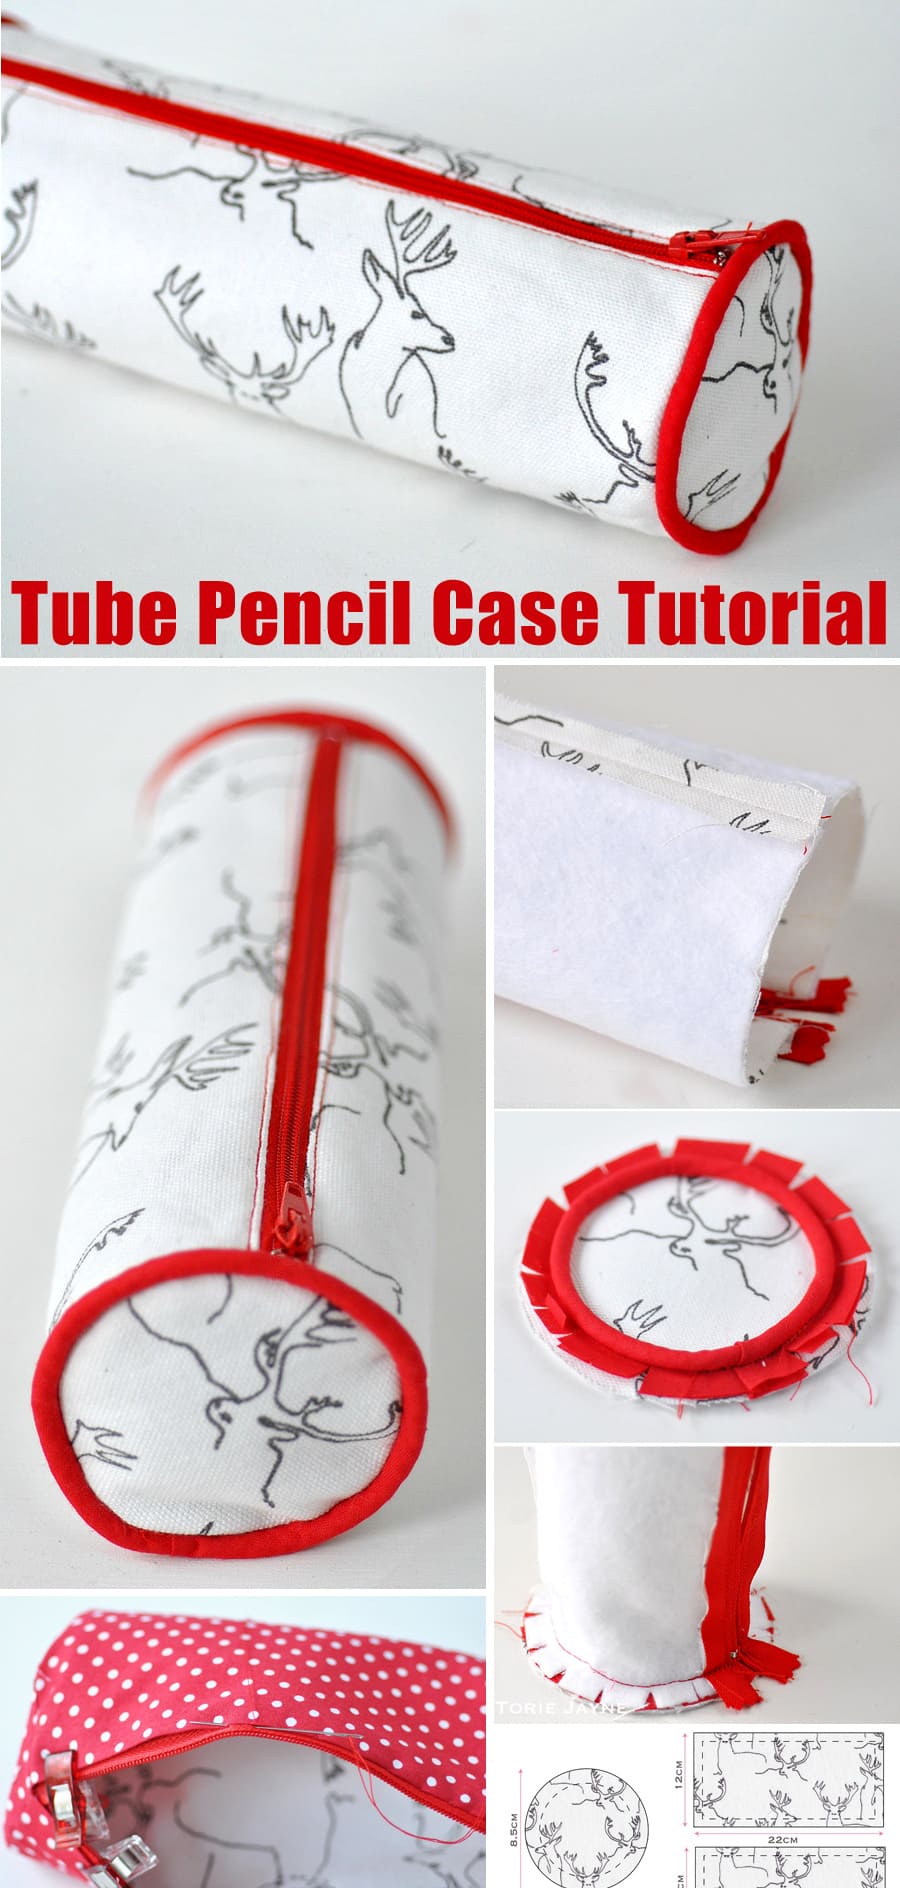 Piped Tube Pencil Case Tutorial